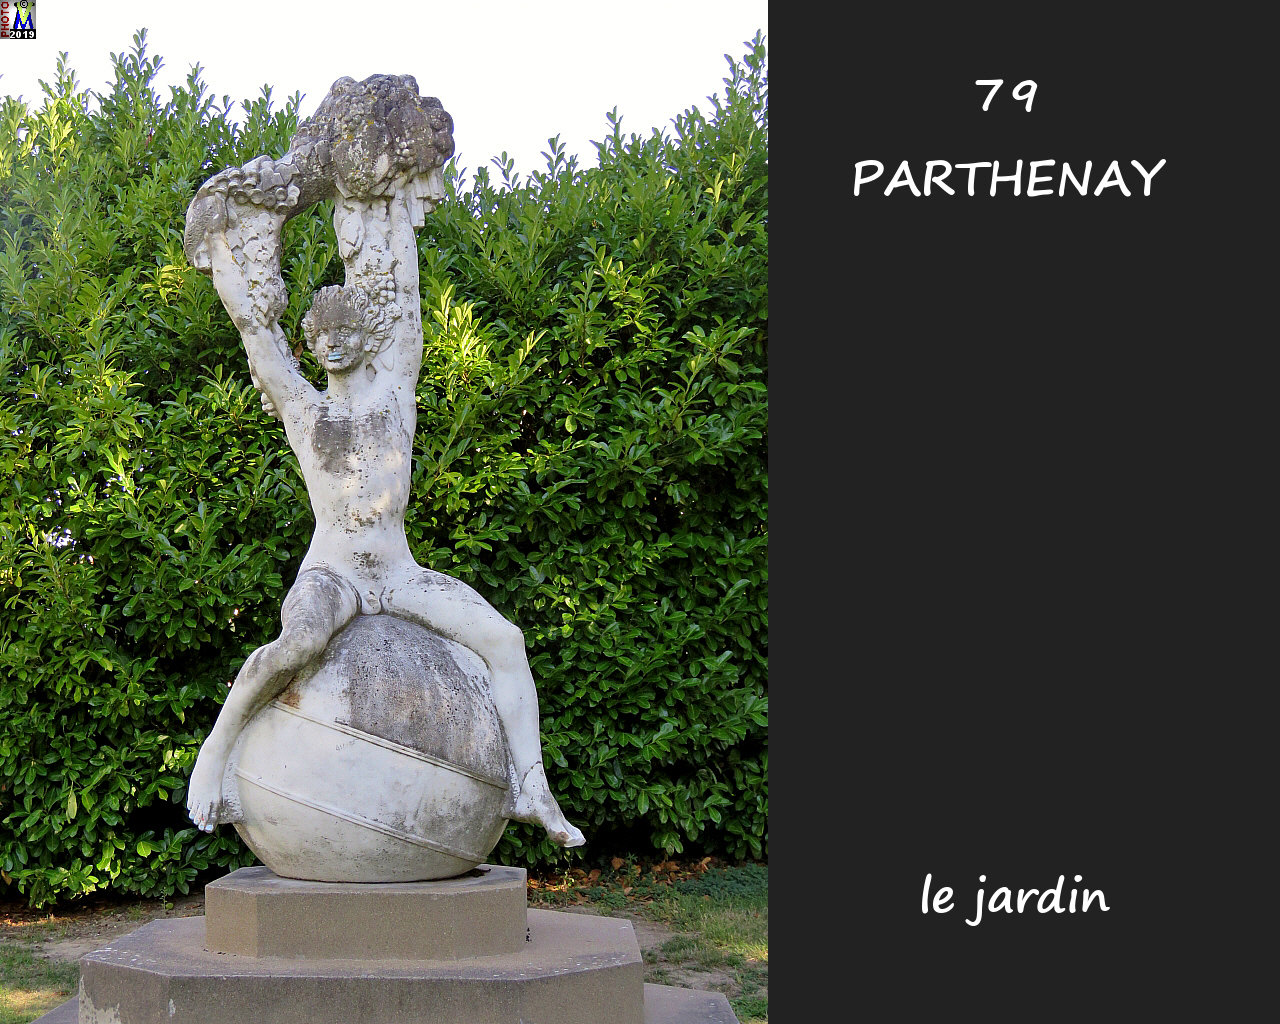 79PARTHENAY_jardin_1012.jpg